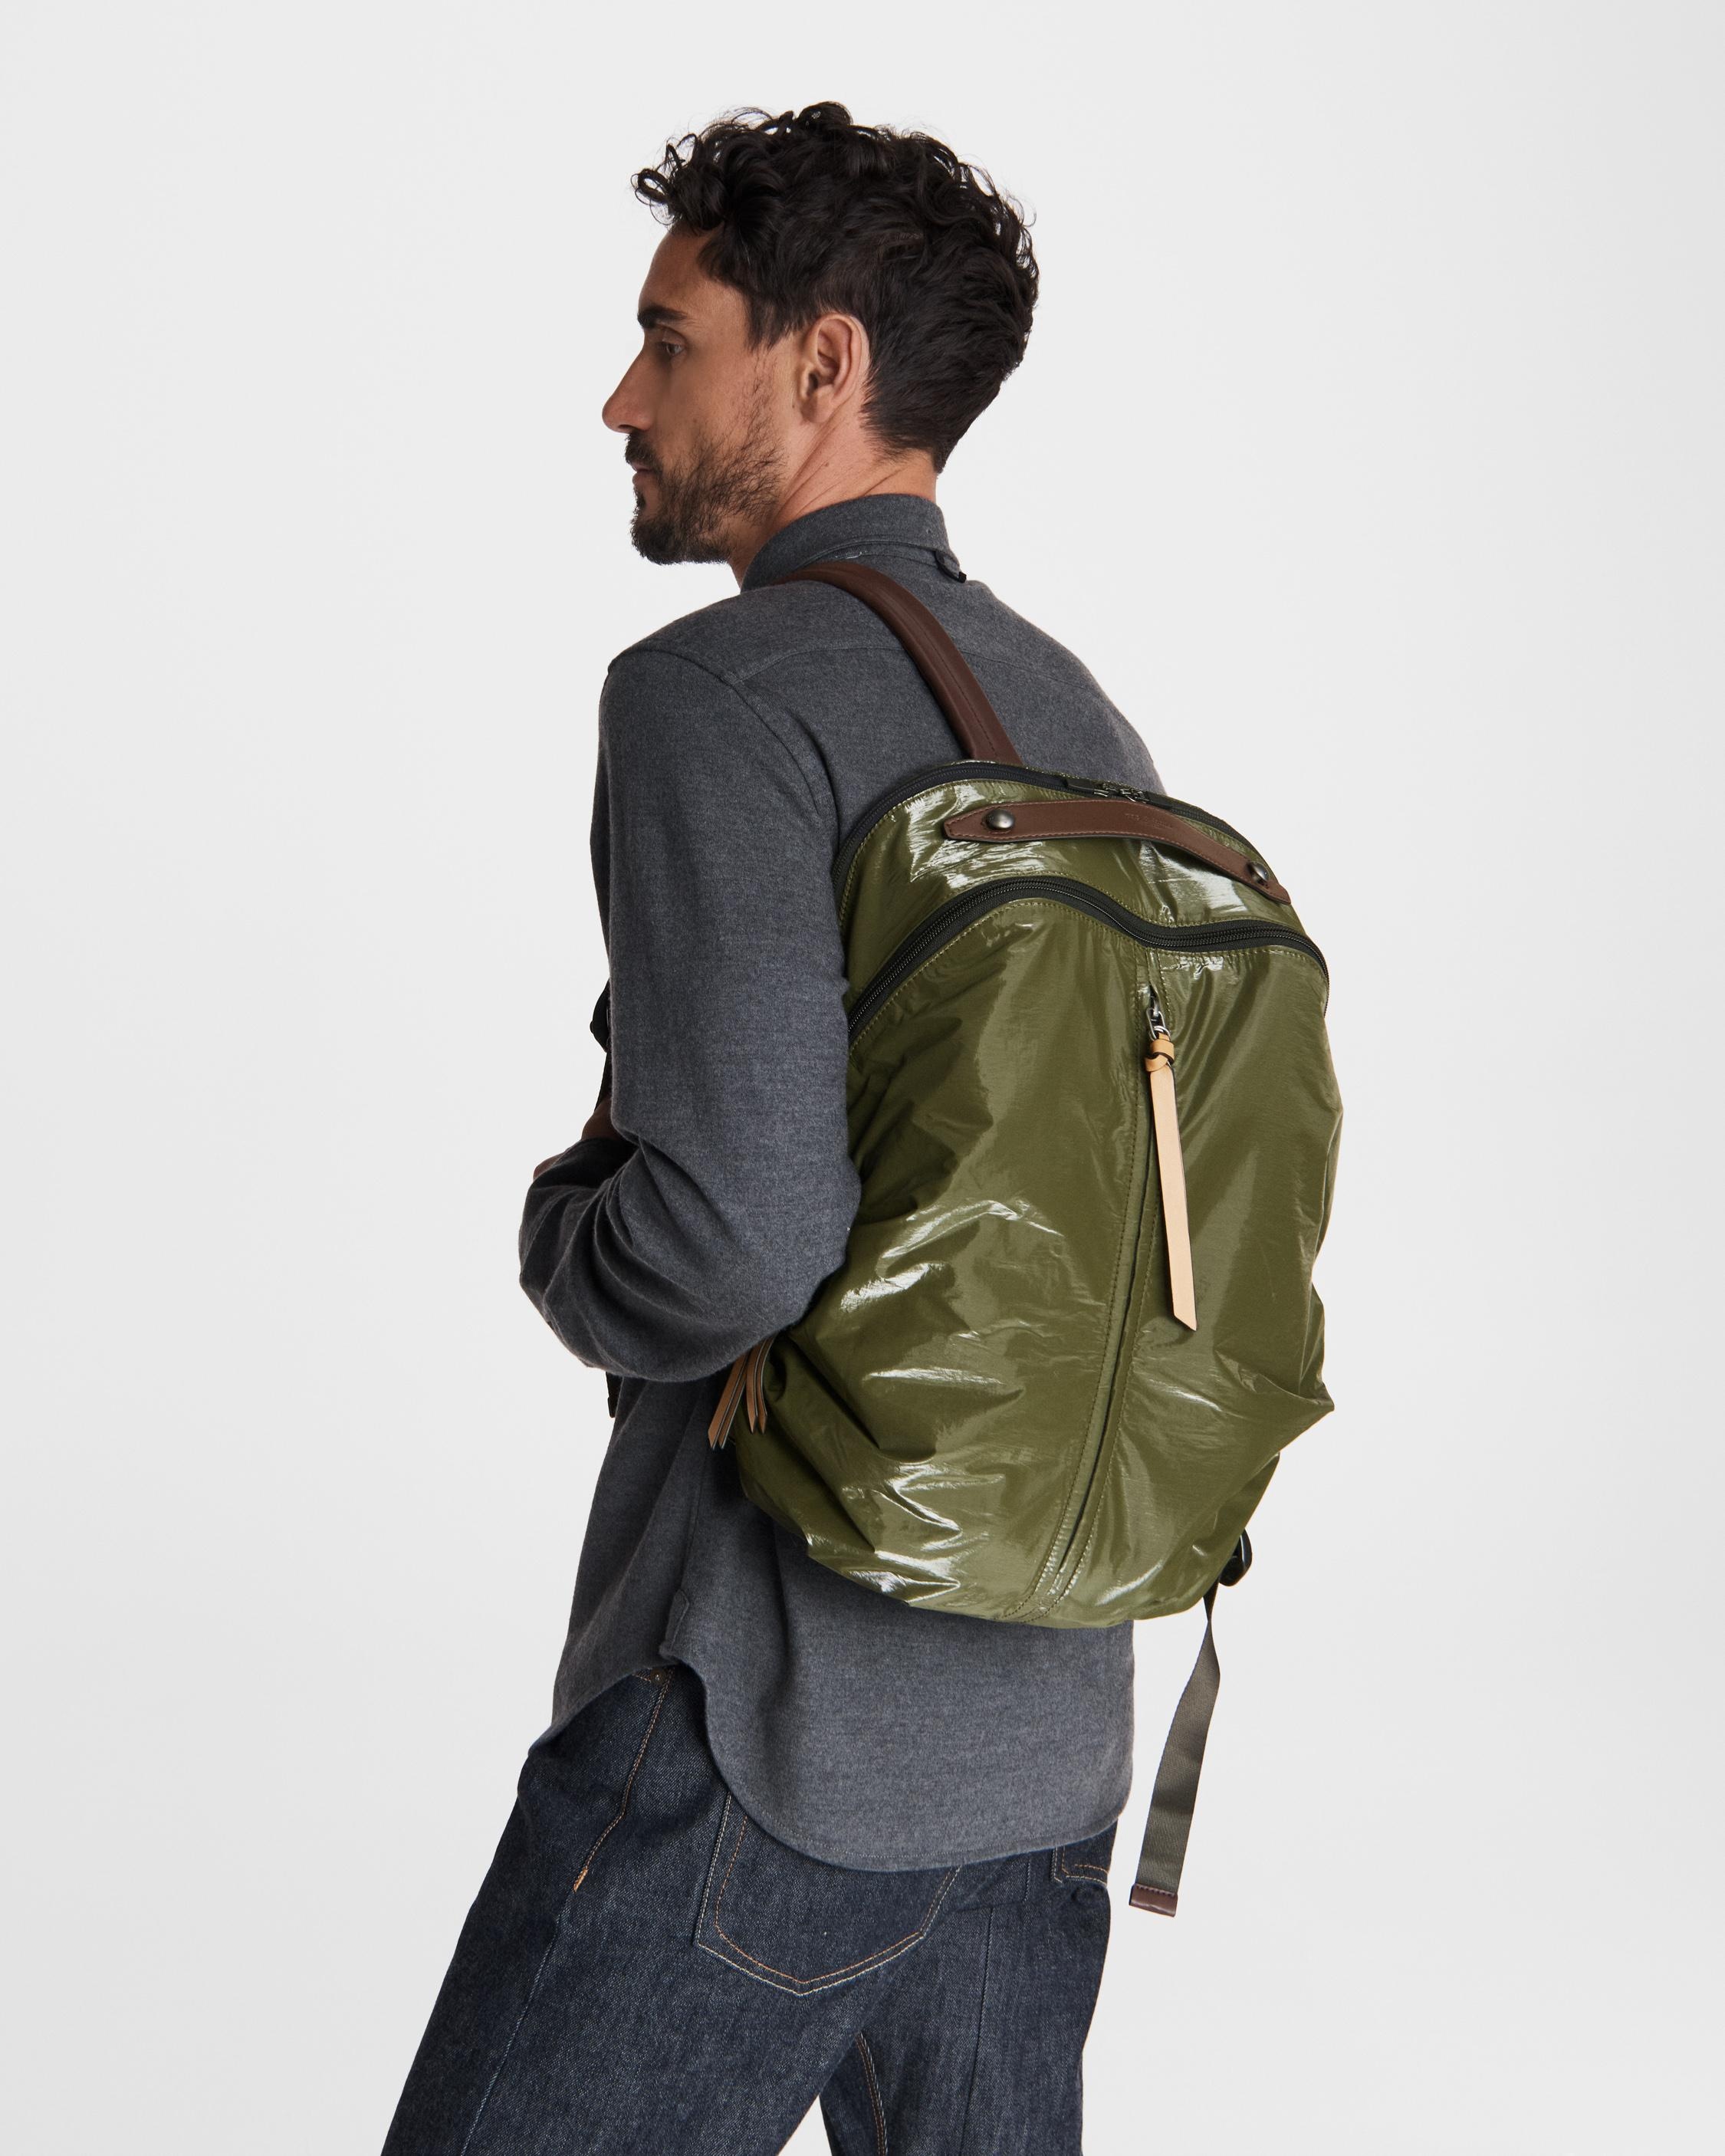 Commuter Backpack - Eco Nylon
Large Backpack - 3